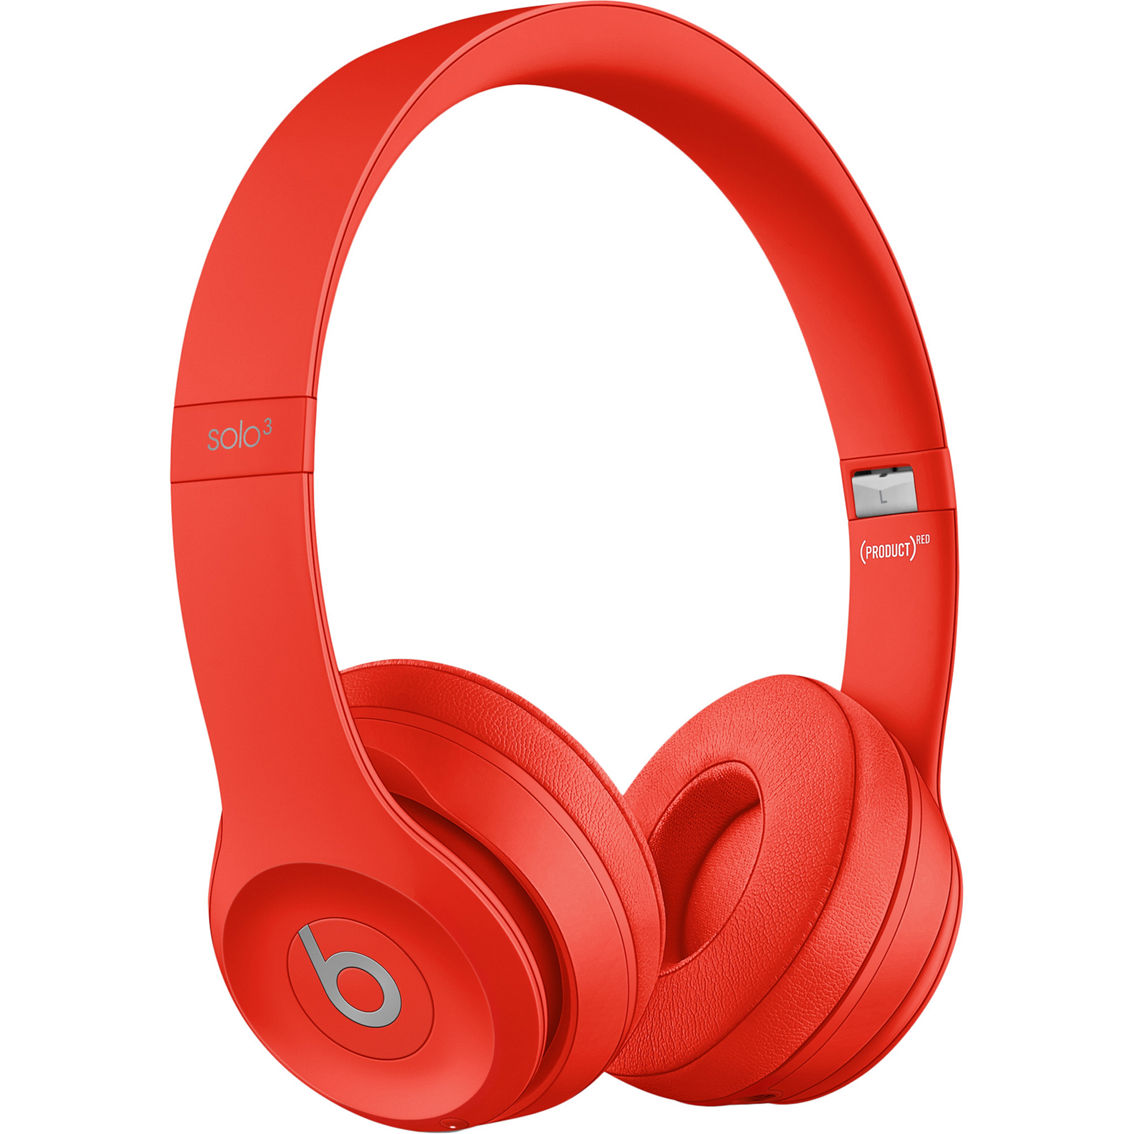 Beats Solo3 Wireless Headphones - Image 1 of 6